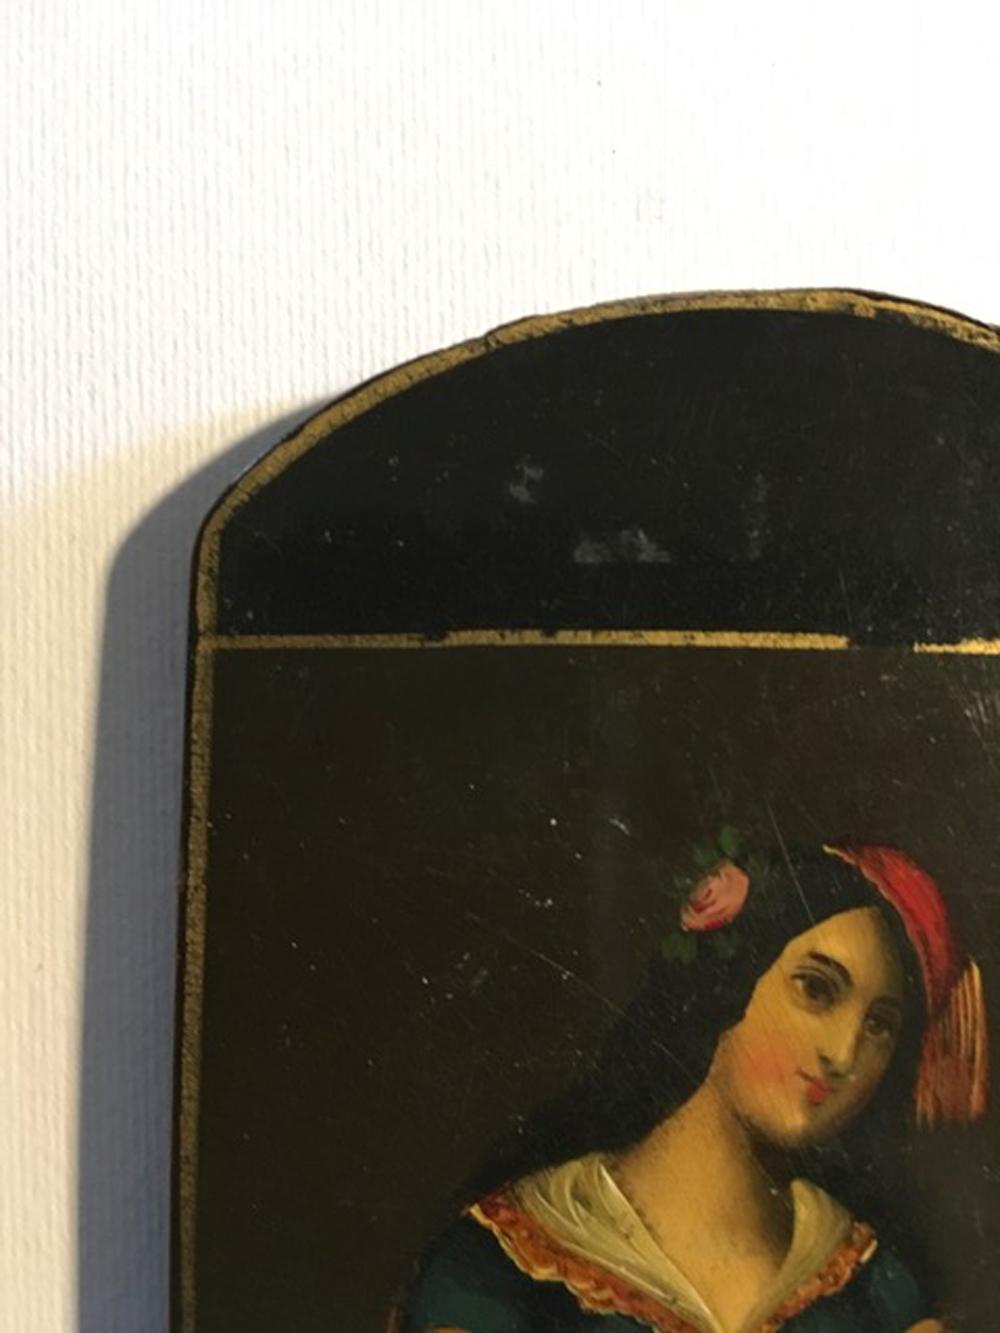 Austria Mid-18th Century Lacquered Portrait Wood Box For Sale 2